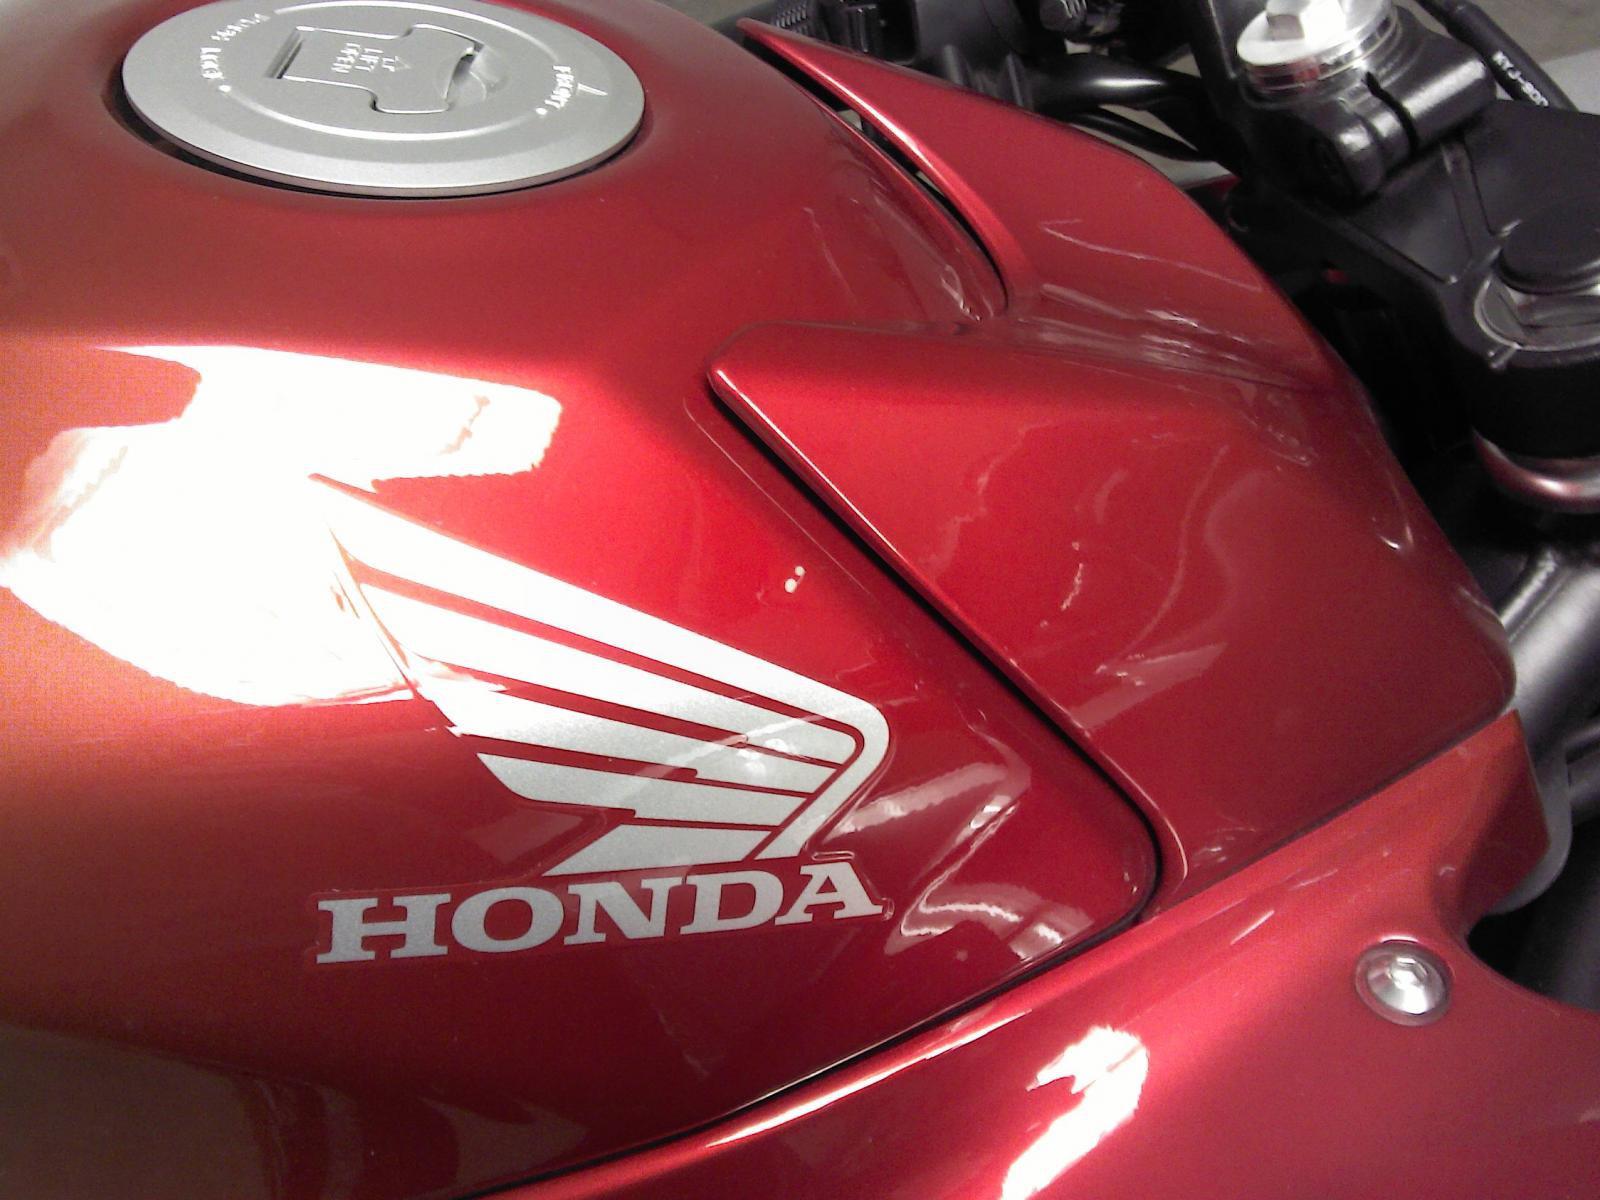 Closeup of honda motorcycle fuel tank